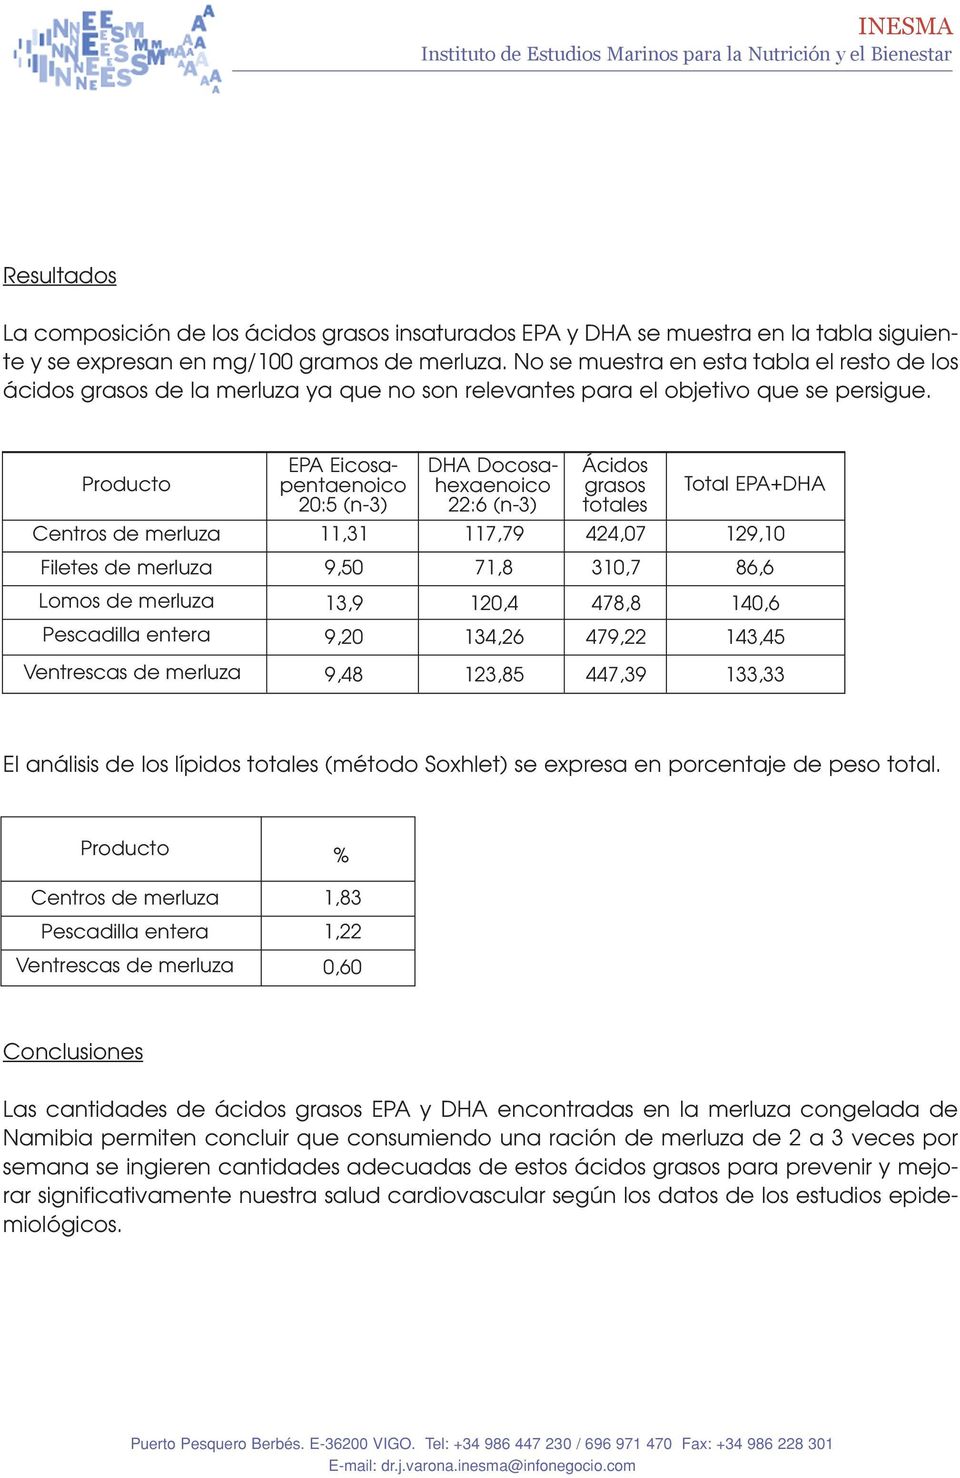 Producto EPA Eicosapentaenoico 20:5 (n-3) DHA Docosahexaenoico 22:6 (n-3) Ácidos grasos totales Total EPA+DHA Centros de merluza 11,31 117,79 424,07 129,10 Filetes de merluza Lomos de merluza